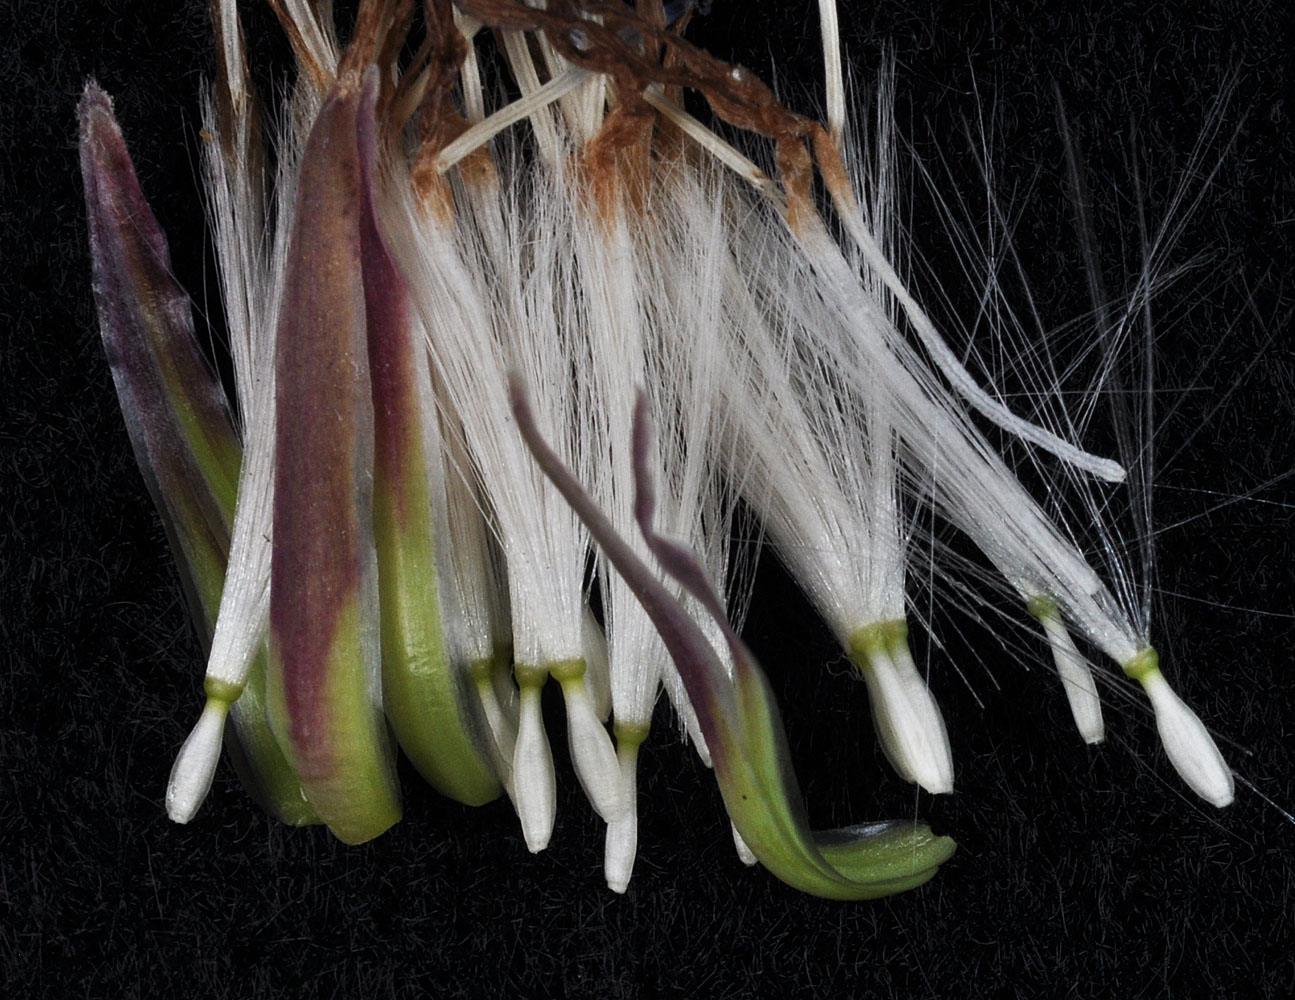 Flora of Eastern Washington Image: Lactuca tatarica